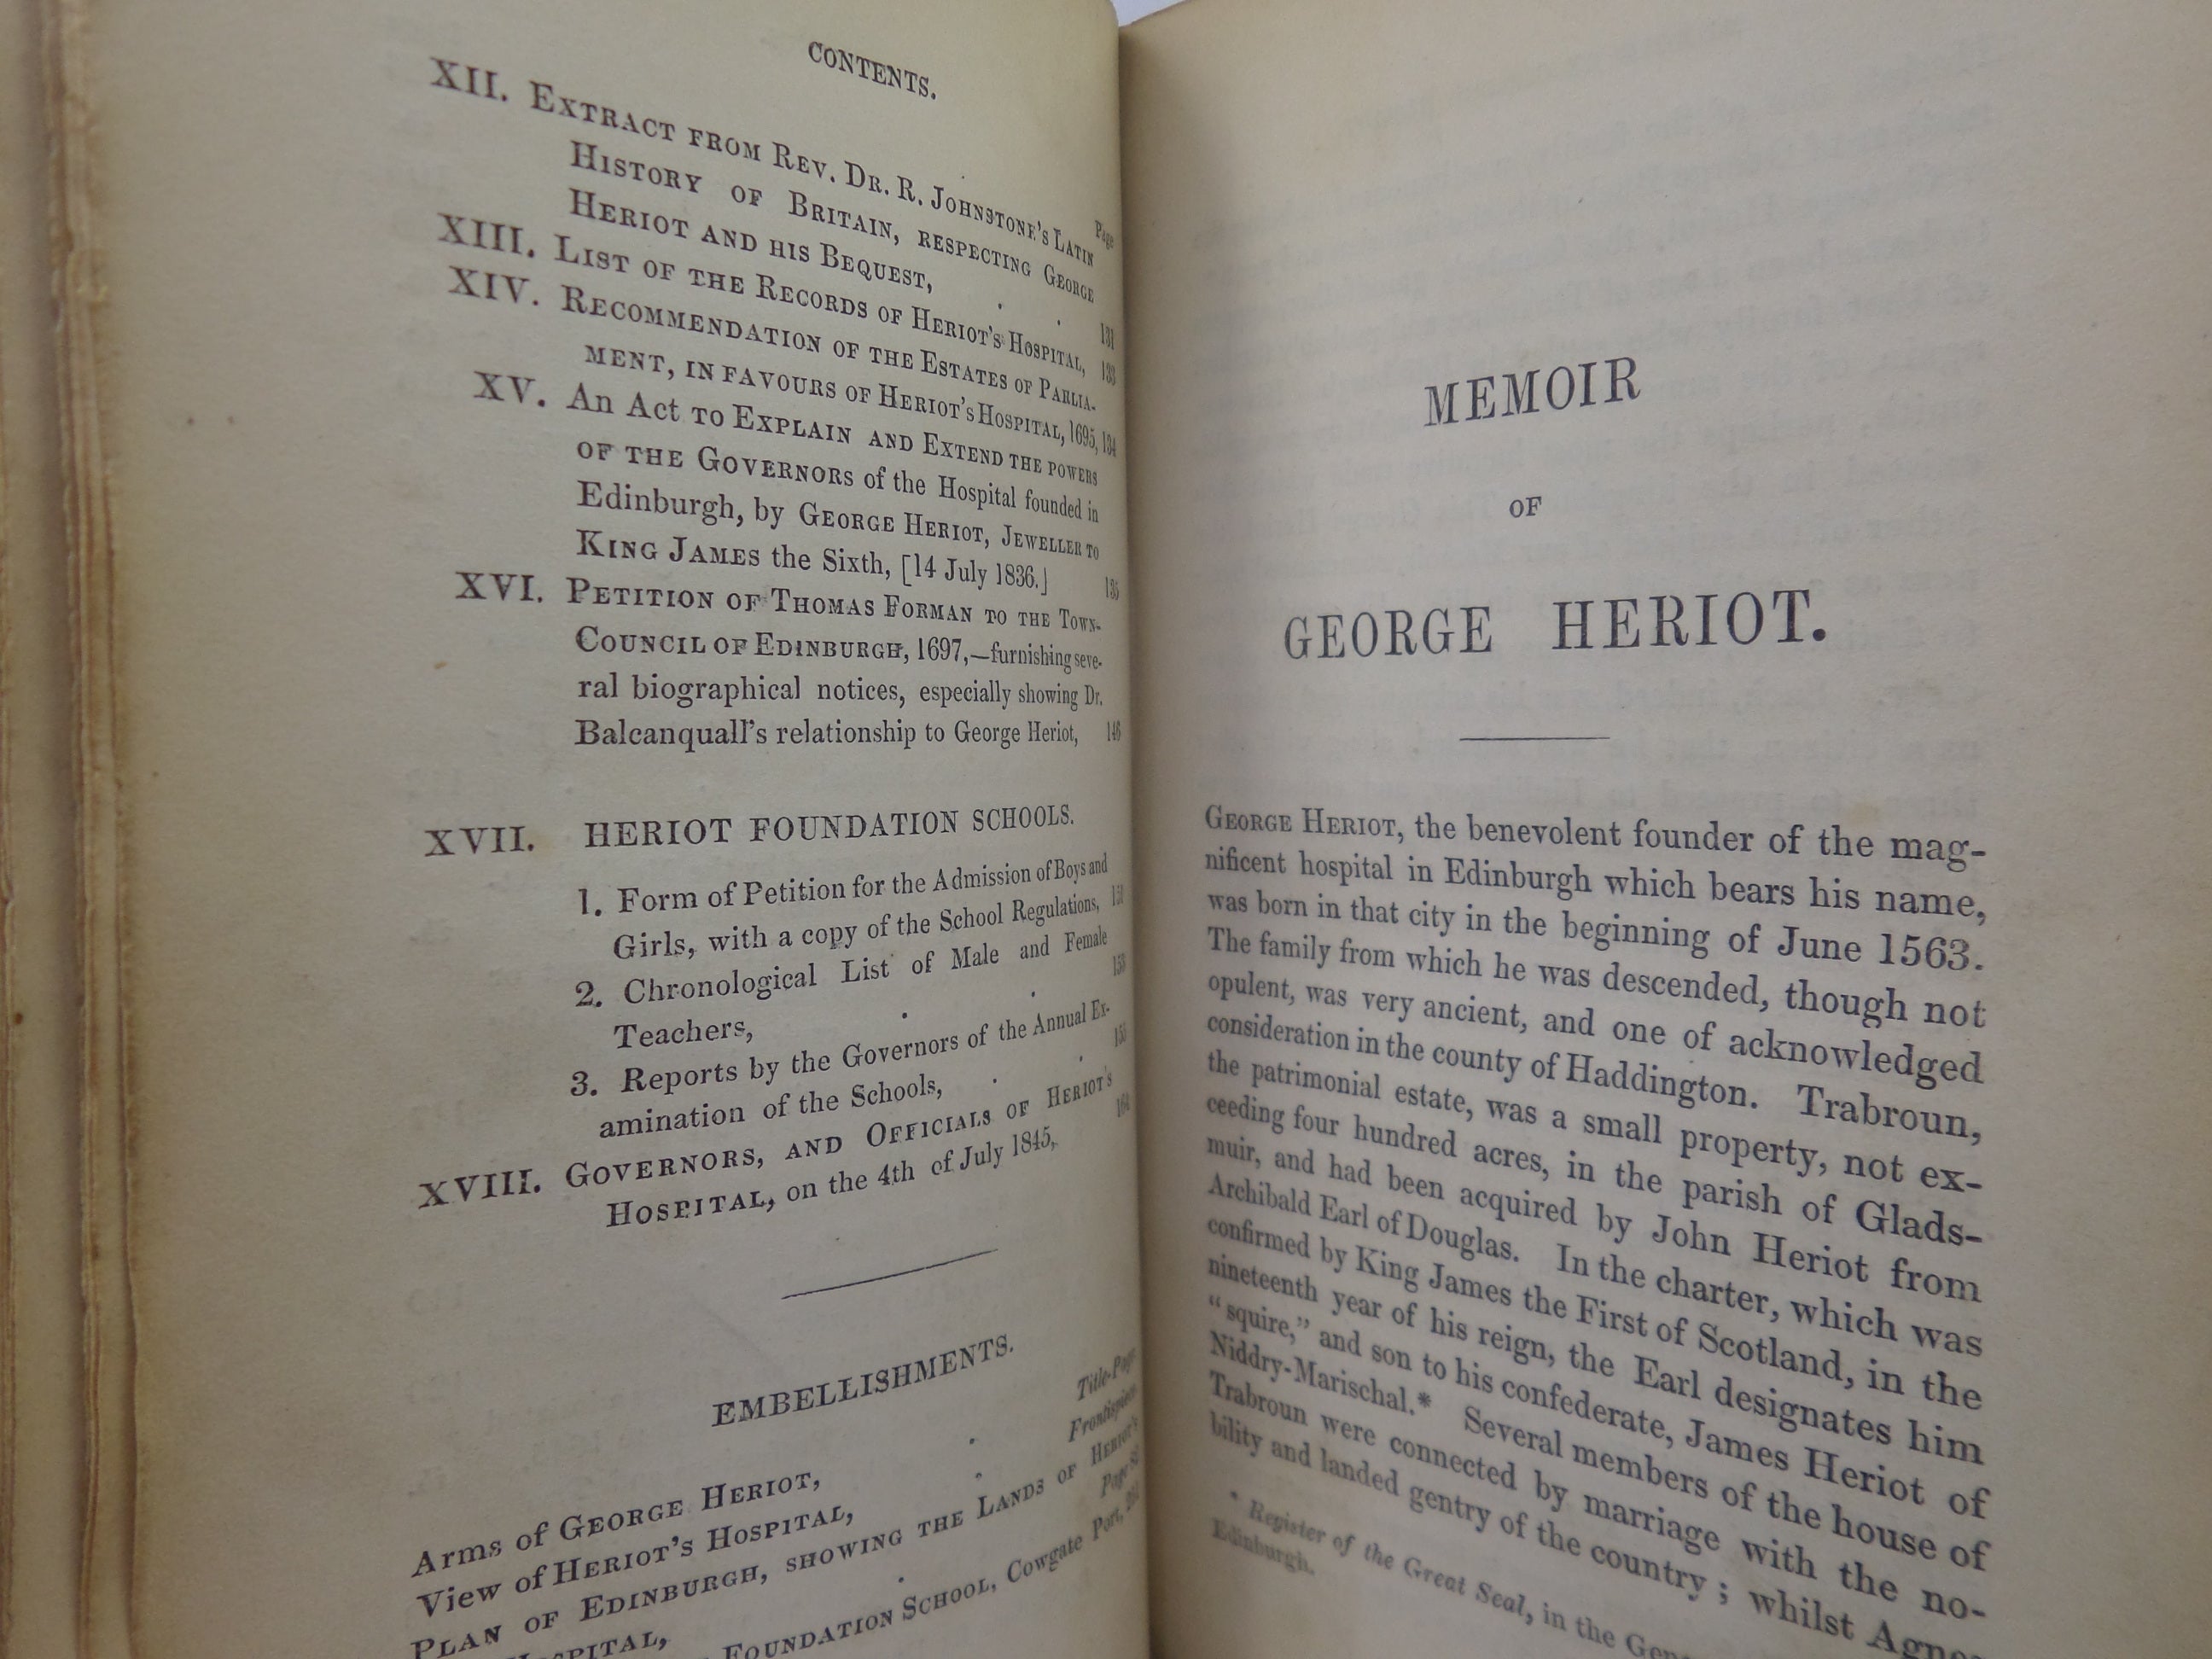 MEMOIR OF GEORGE HERIOT BY WILLIAM STEVEN 1845 FINE LEATHER BINDING